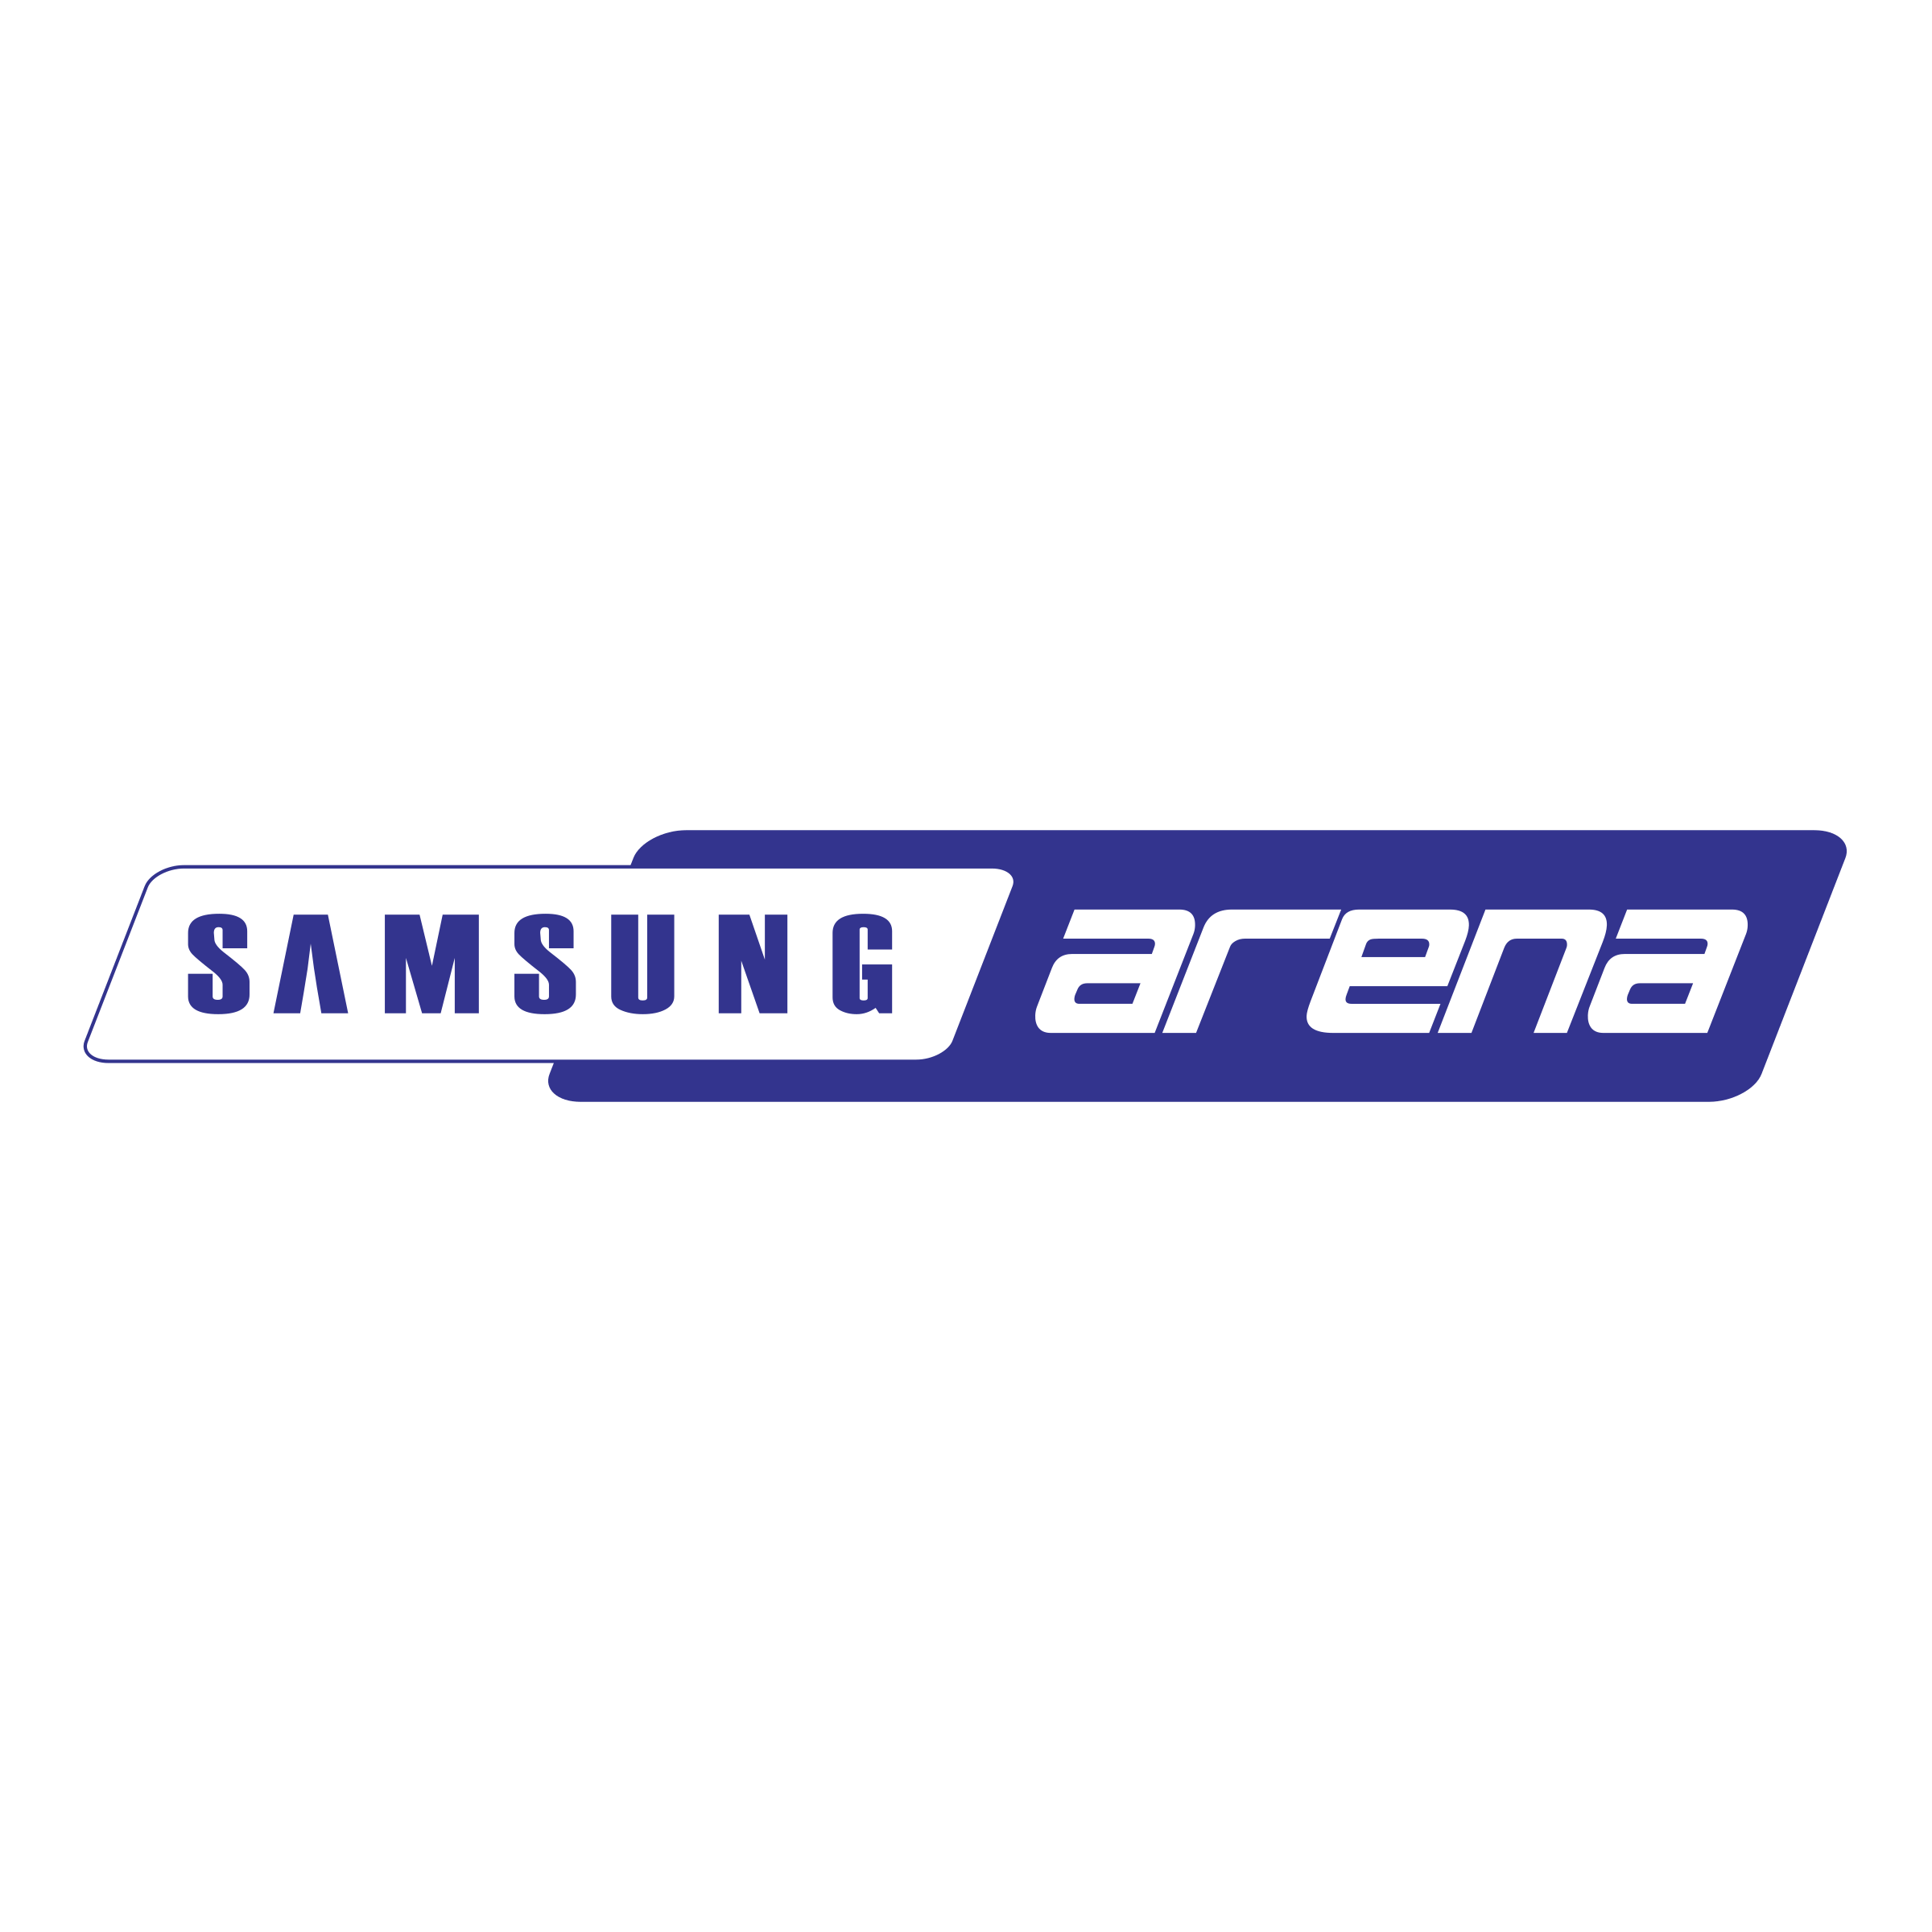 Arena Logo - Samsung ARENA Logo PNG Transparent & SVG Vector